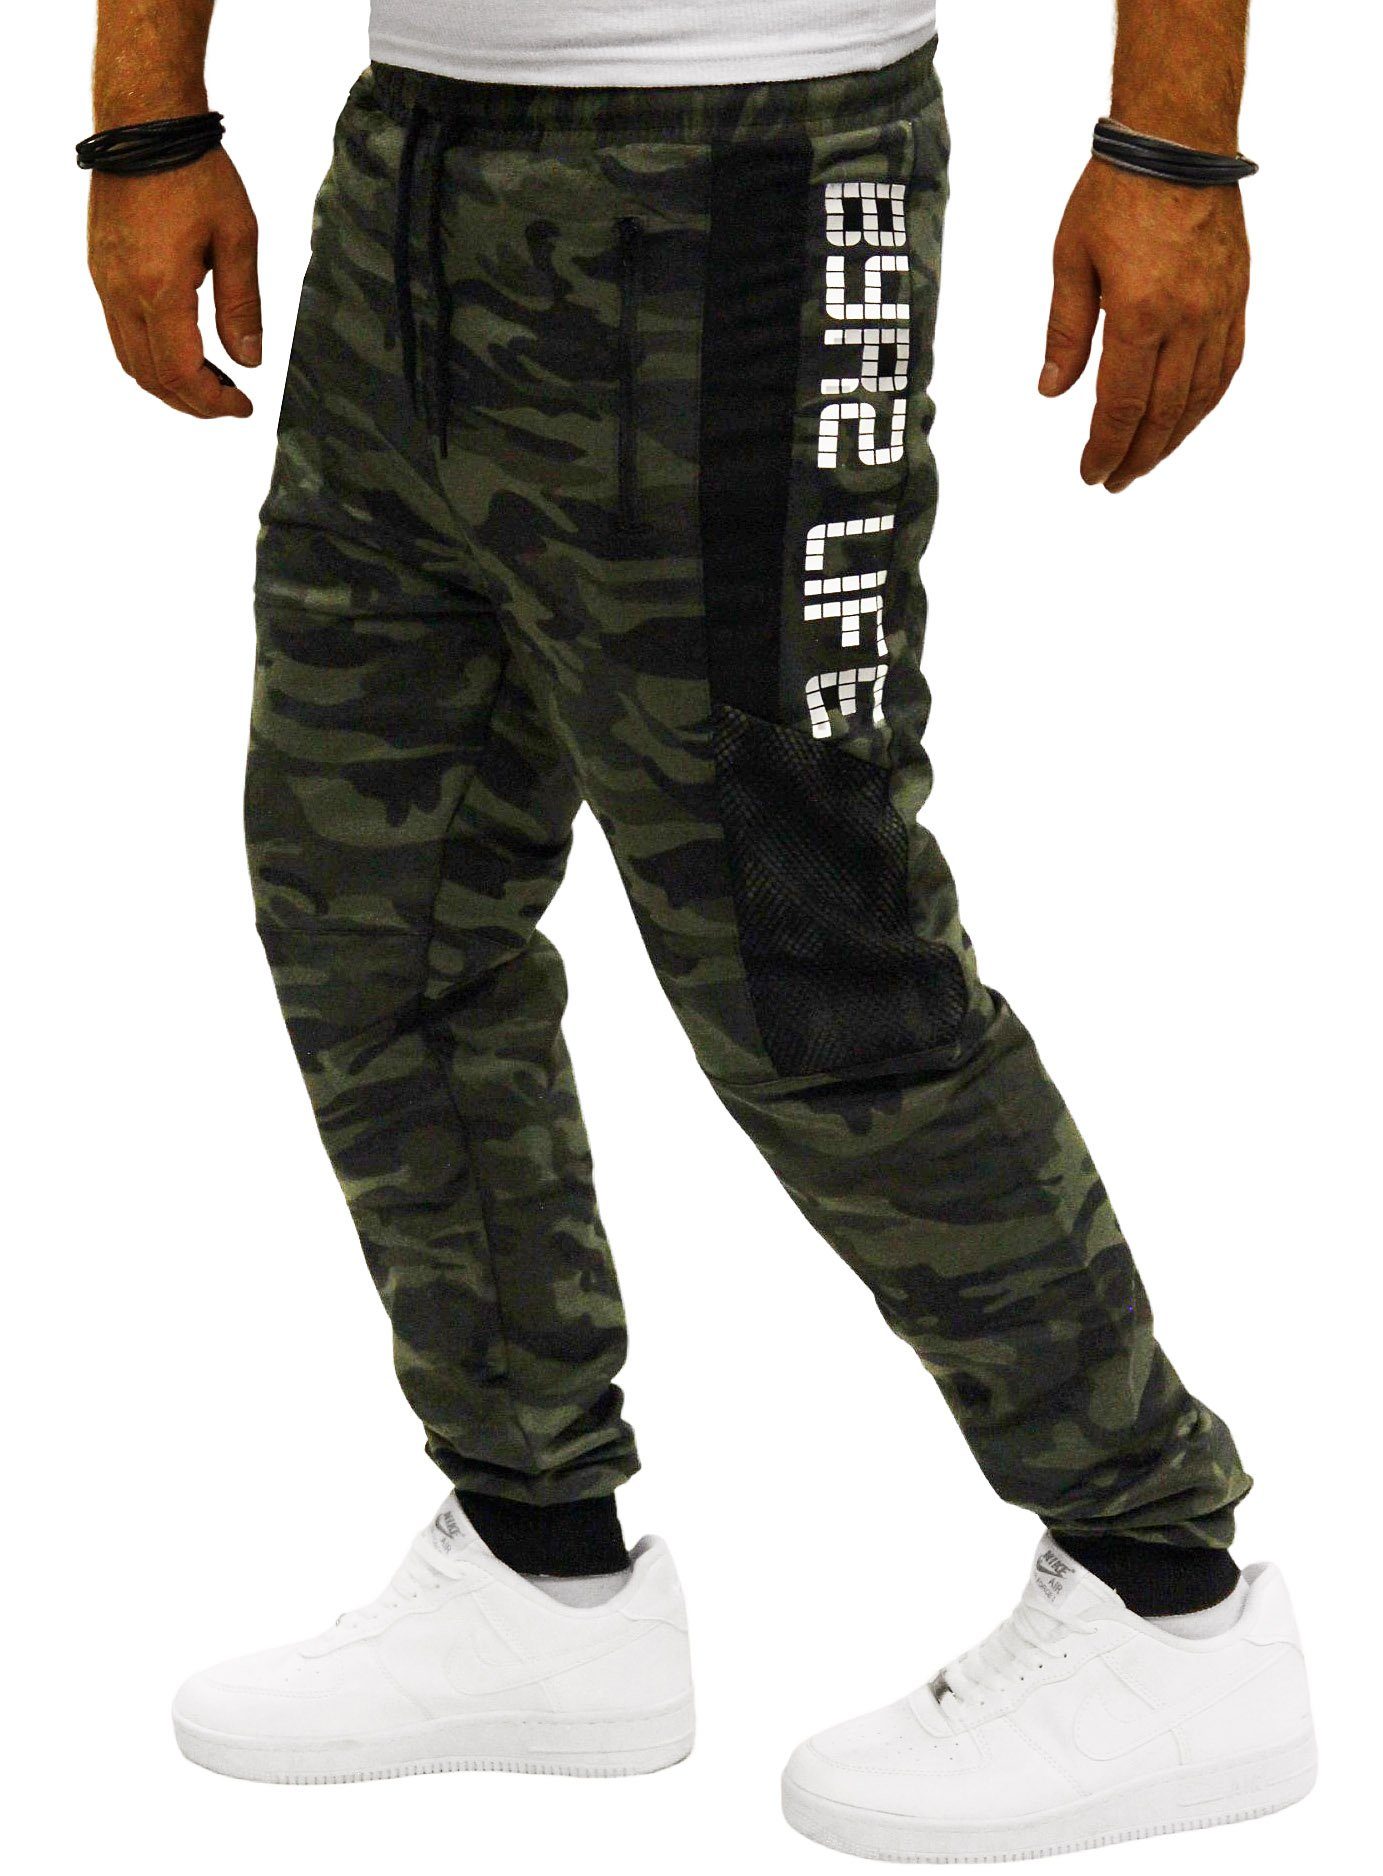 RMK Sporthose »Herren Trainingshose Jogginghose Fitnesshose Camouflage Army  Tarn Hose« online kaufen | OTTO